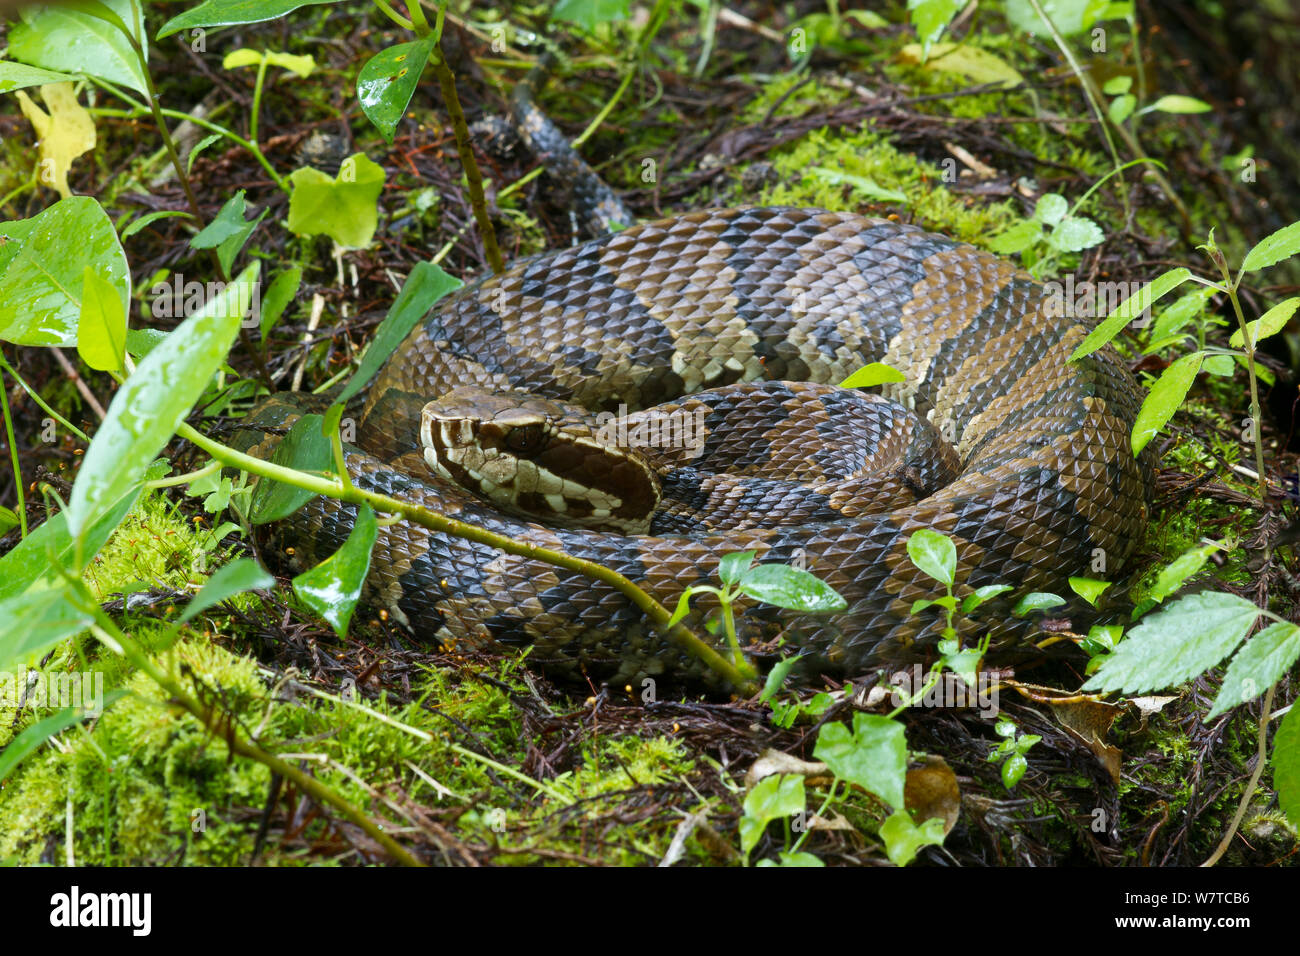 Florida cottonmouth snake (Agkistrodon piscivorus conanti) coiled among vegetation, Corkscrew Swamp, Florida, USA, April. Stock Photo